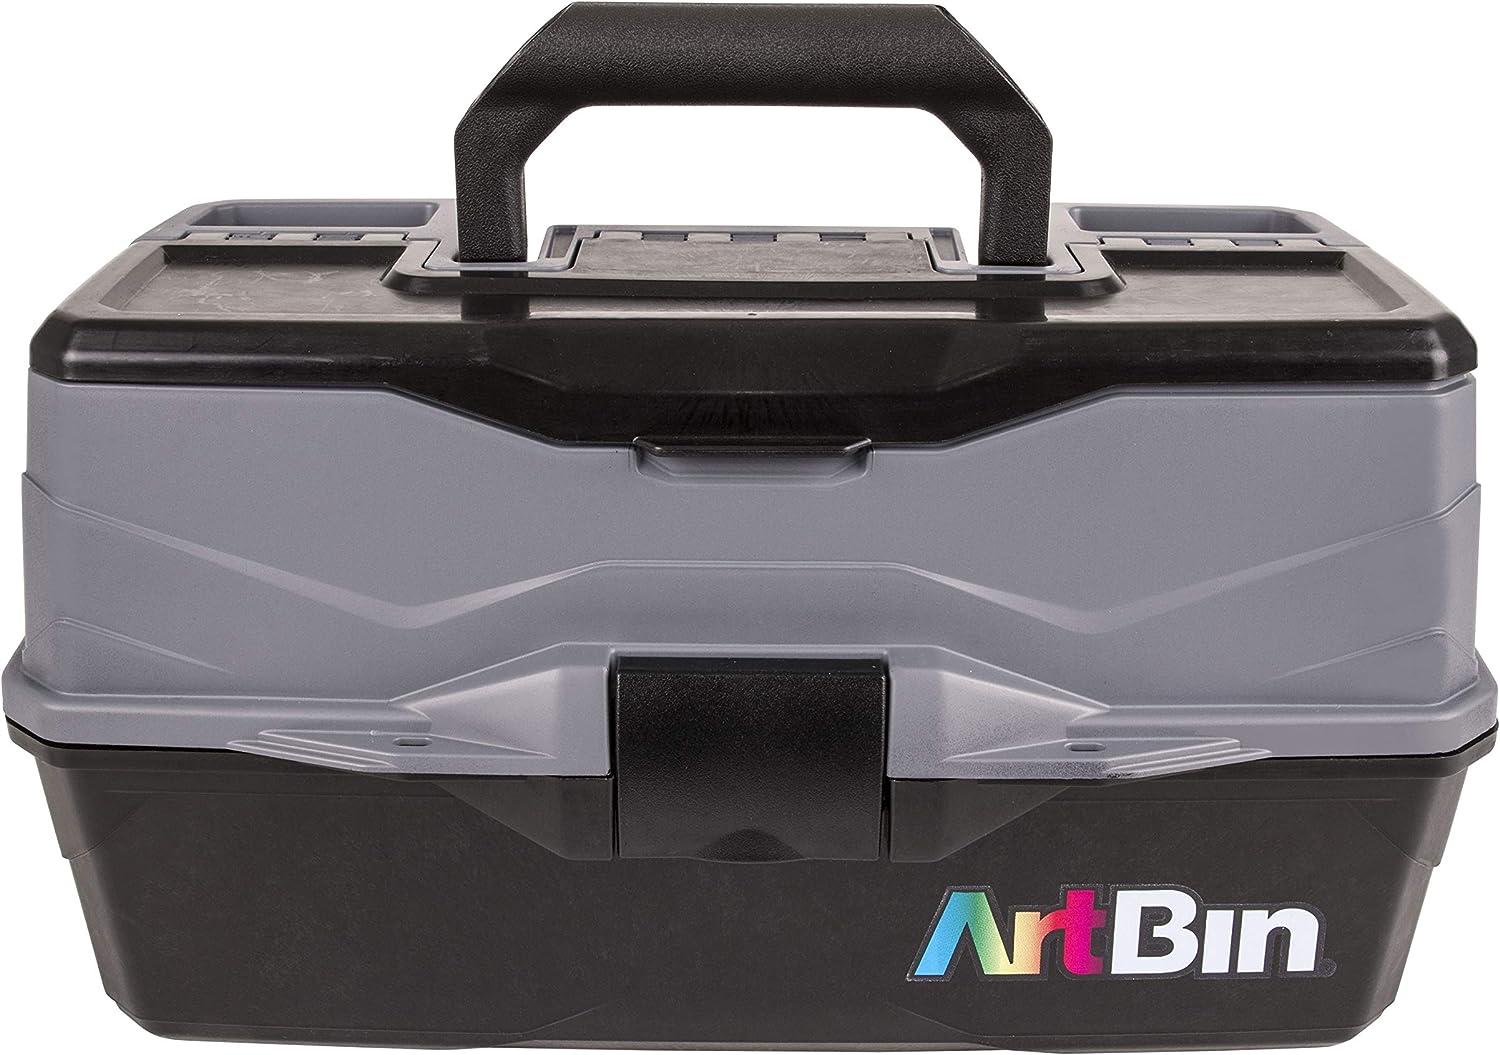 ArtBin Lift Out Tray Plastic Box